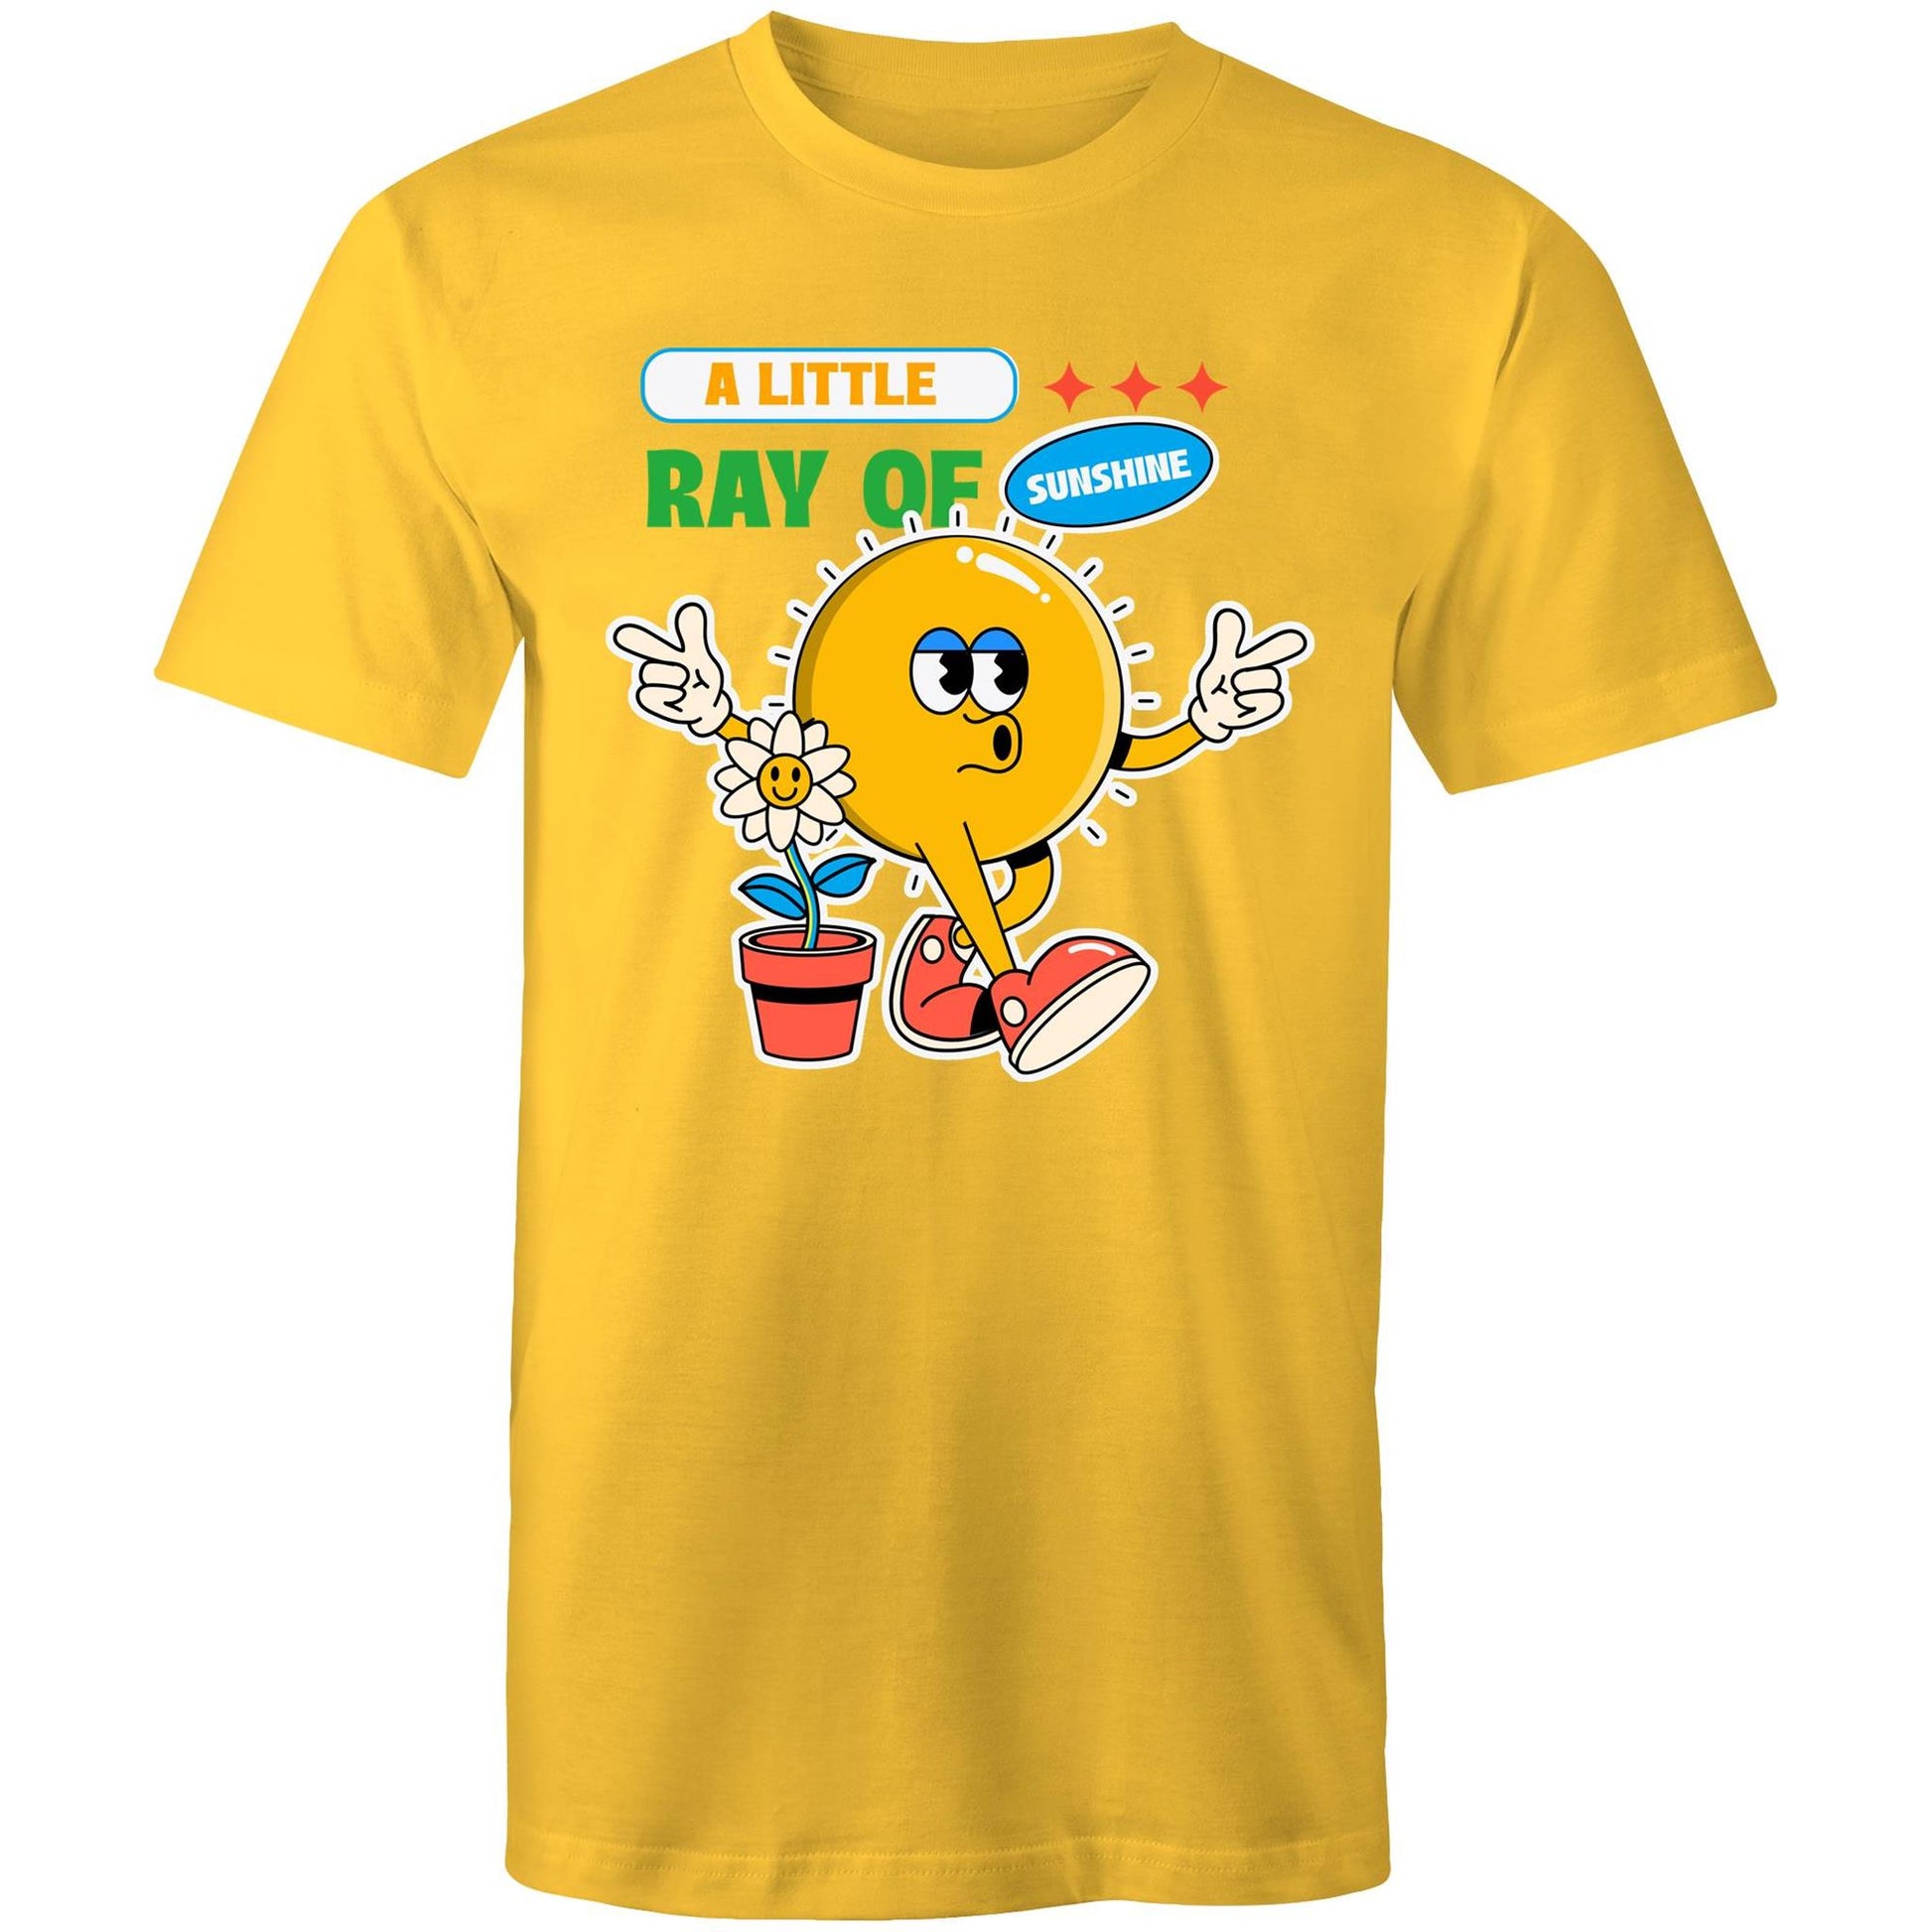 A Little Ray Of Sunshine - Mens T-Shirt Yellow Mens T-shirt Retro Summer